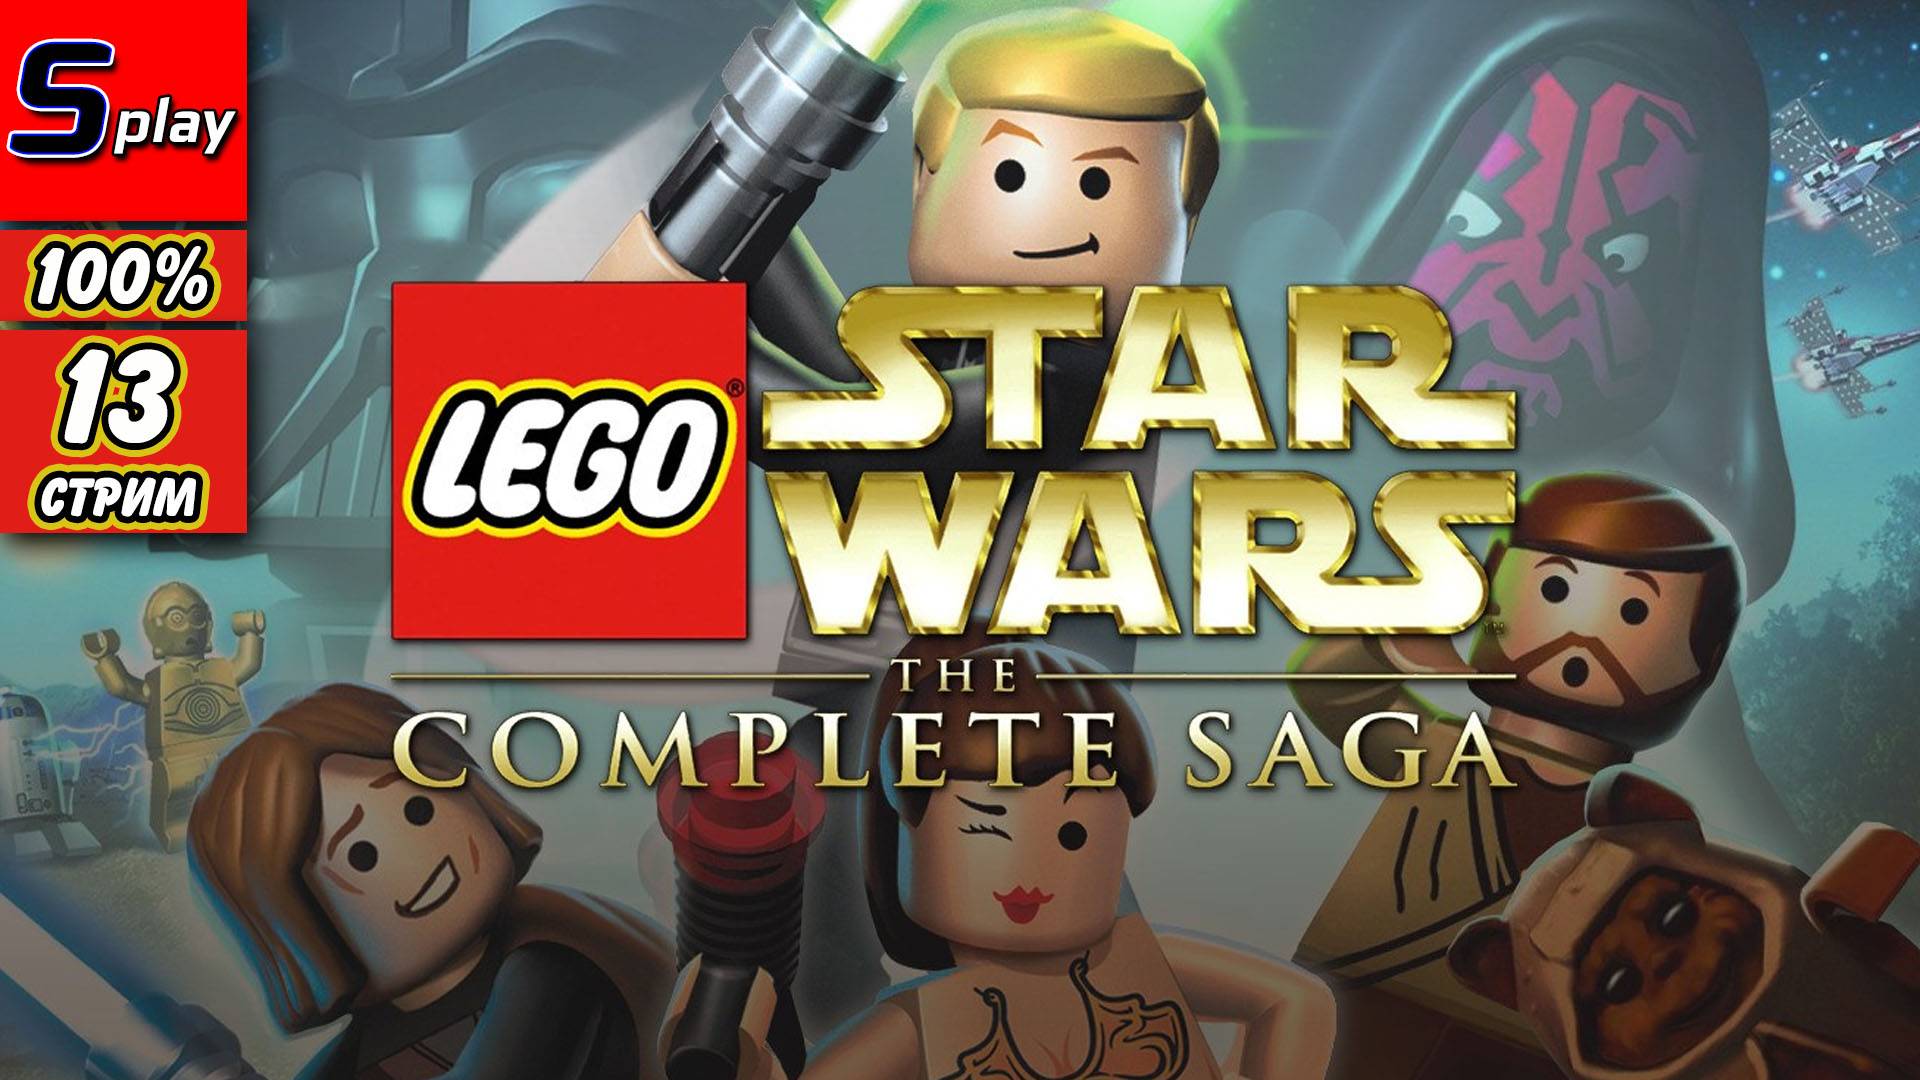 Lego Star Wars The Complete Saga на 100% - [13-стрим] - Собирательство